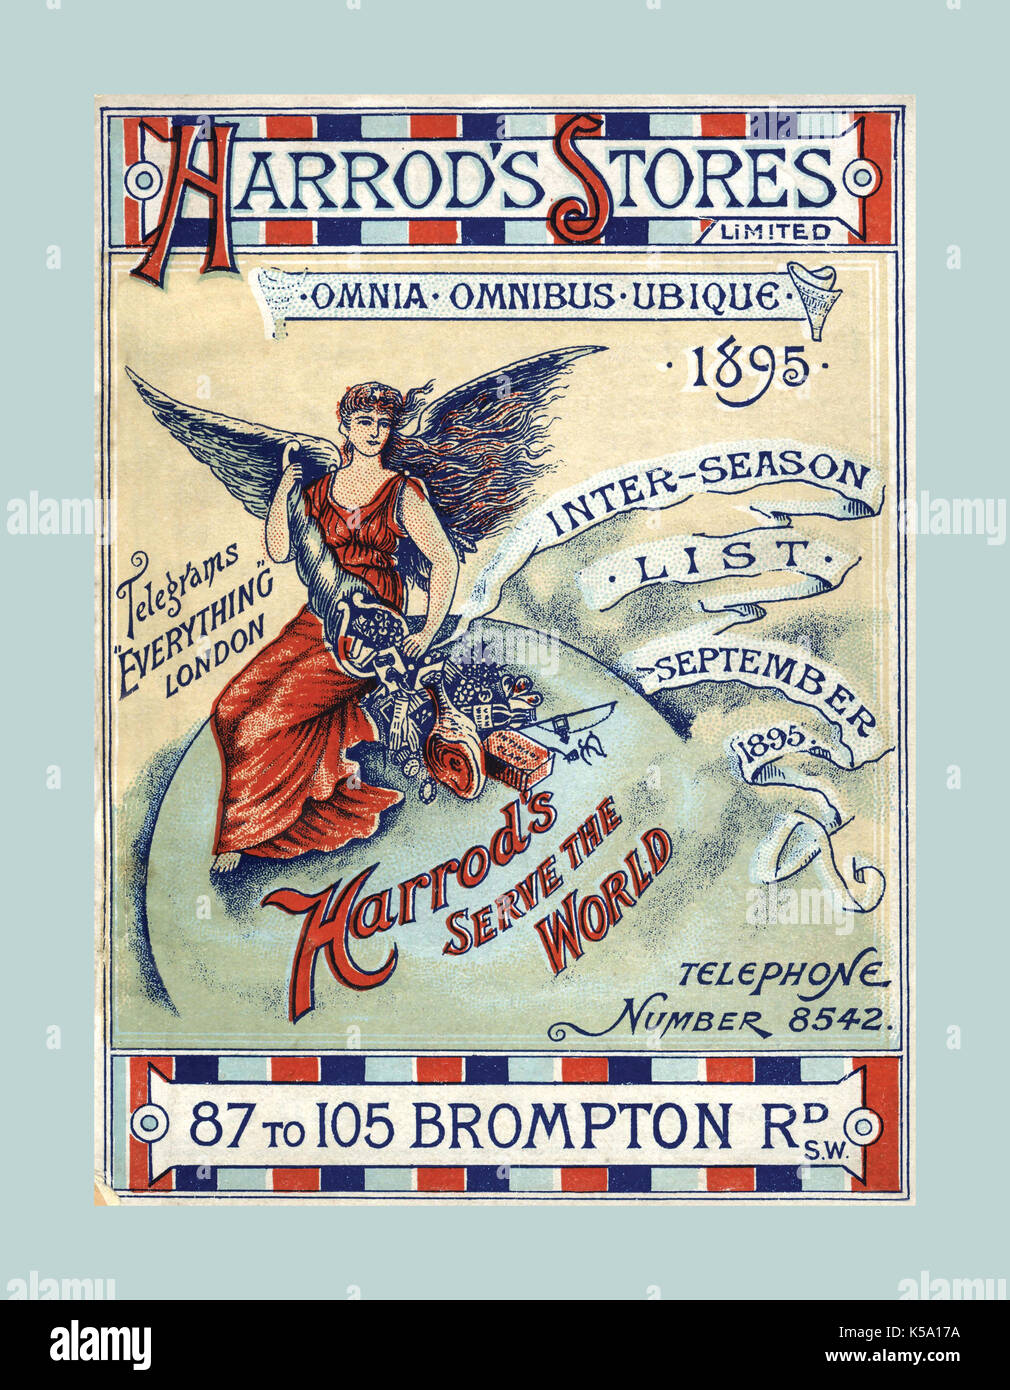 VINTAGE 1895 HARRODS STORES INTER-SEASON PRICE LIST POSTER 'Harrods serves the world' Brompton Road London SW1 Stock Photo